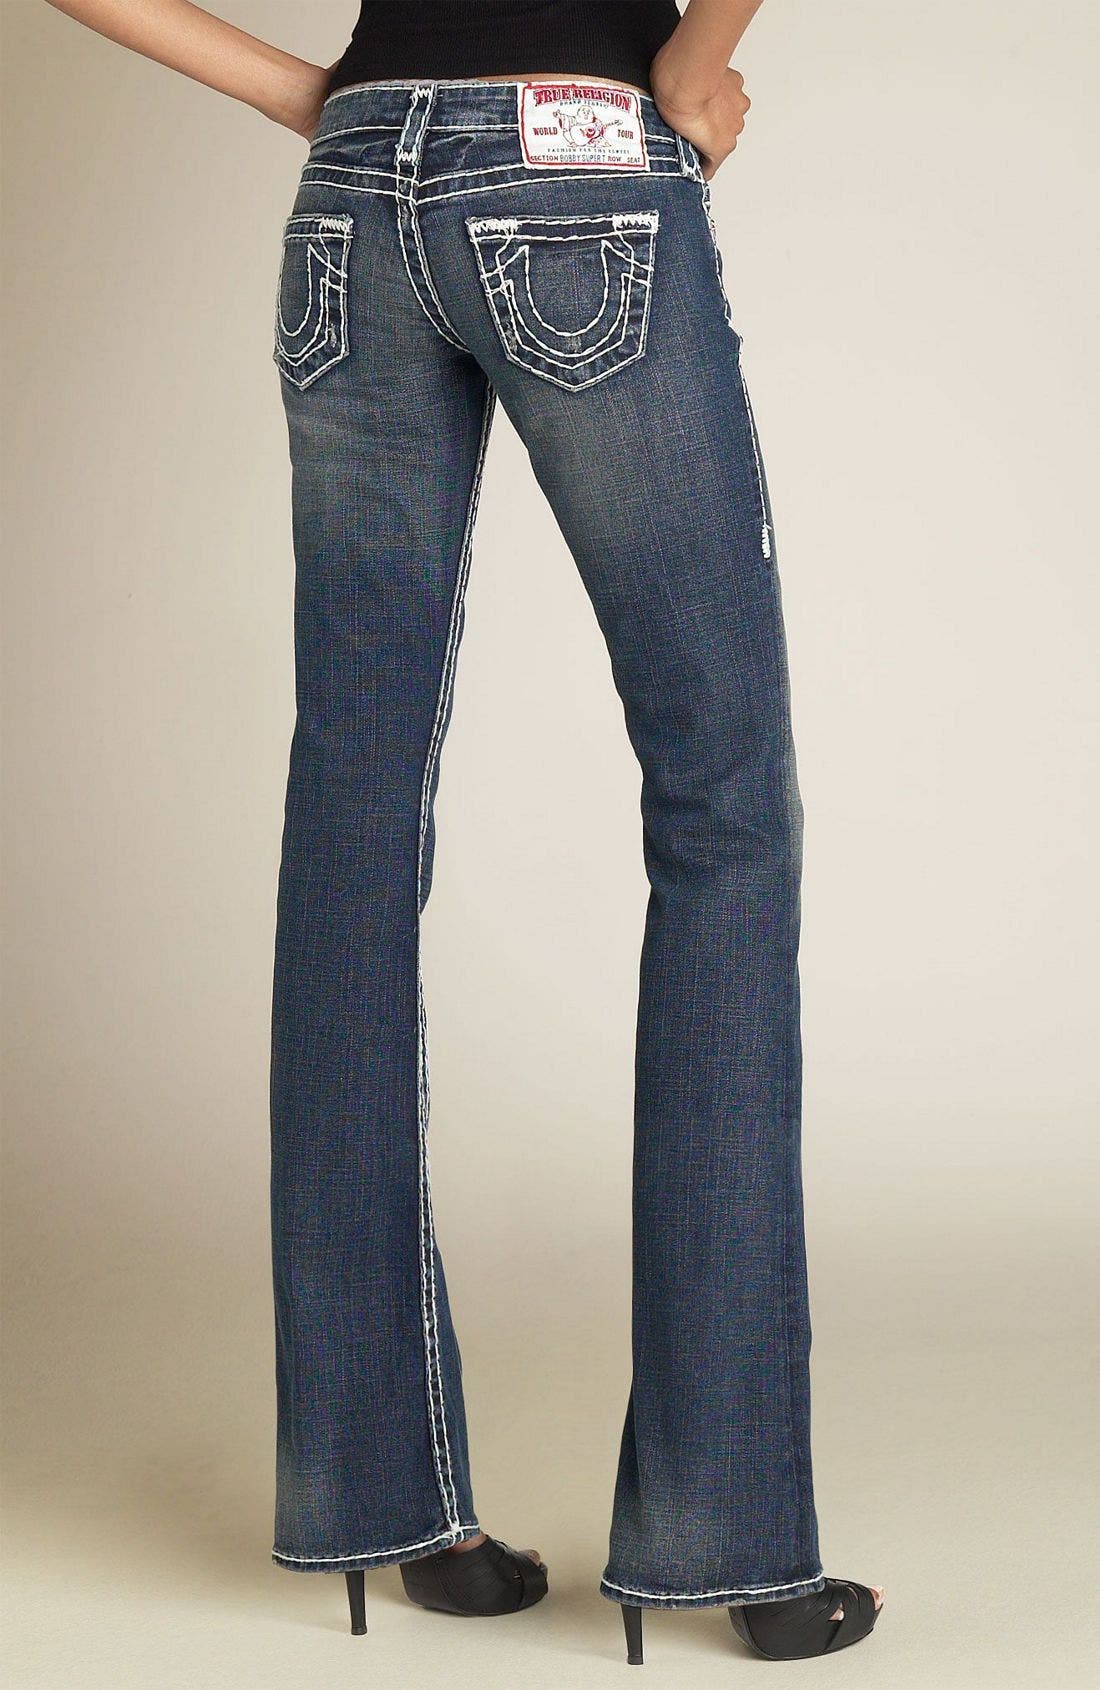 true religion bobby jeans